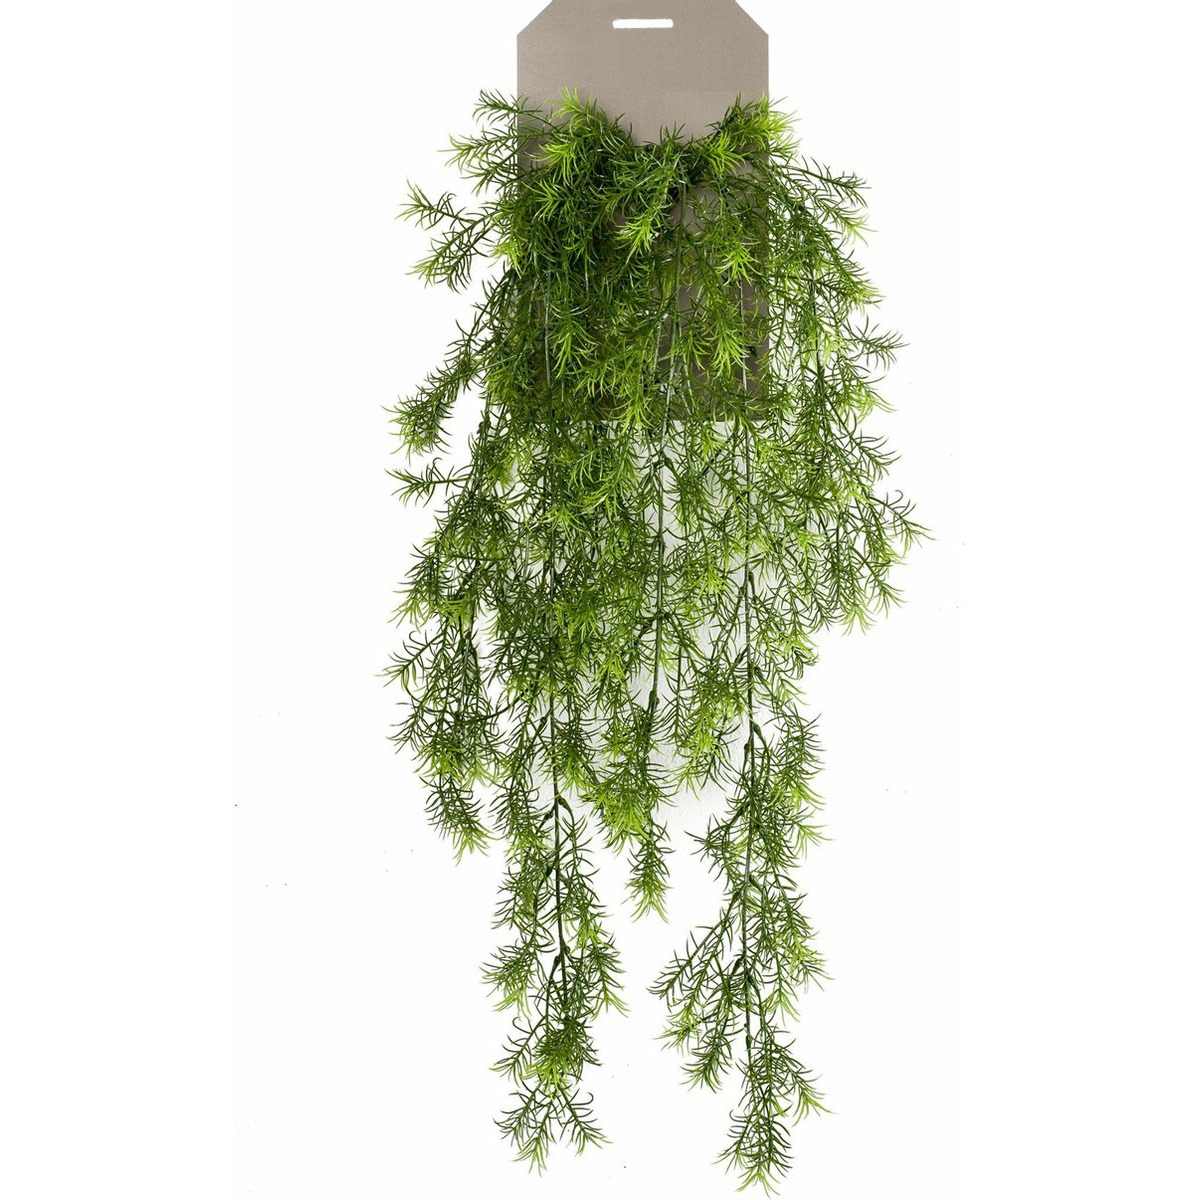 Emerald kunstplant-hangplant Asparagus groen 75 cm lang